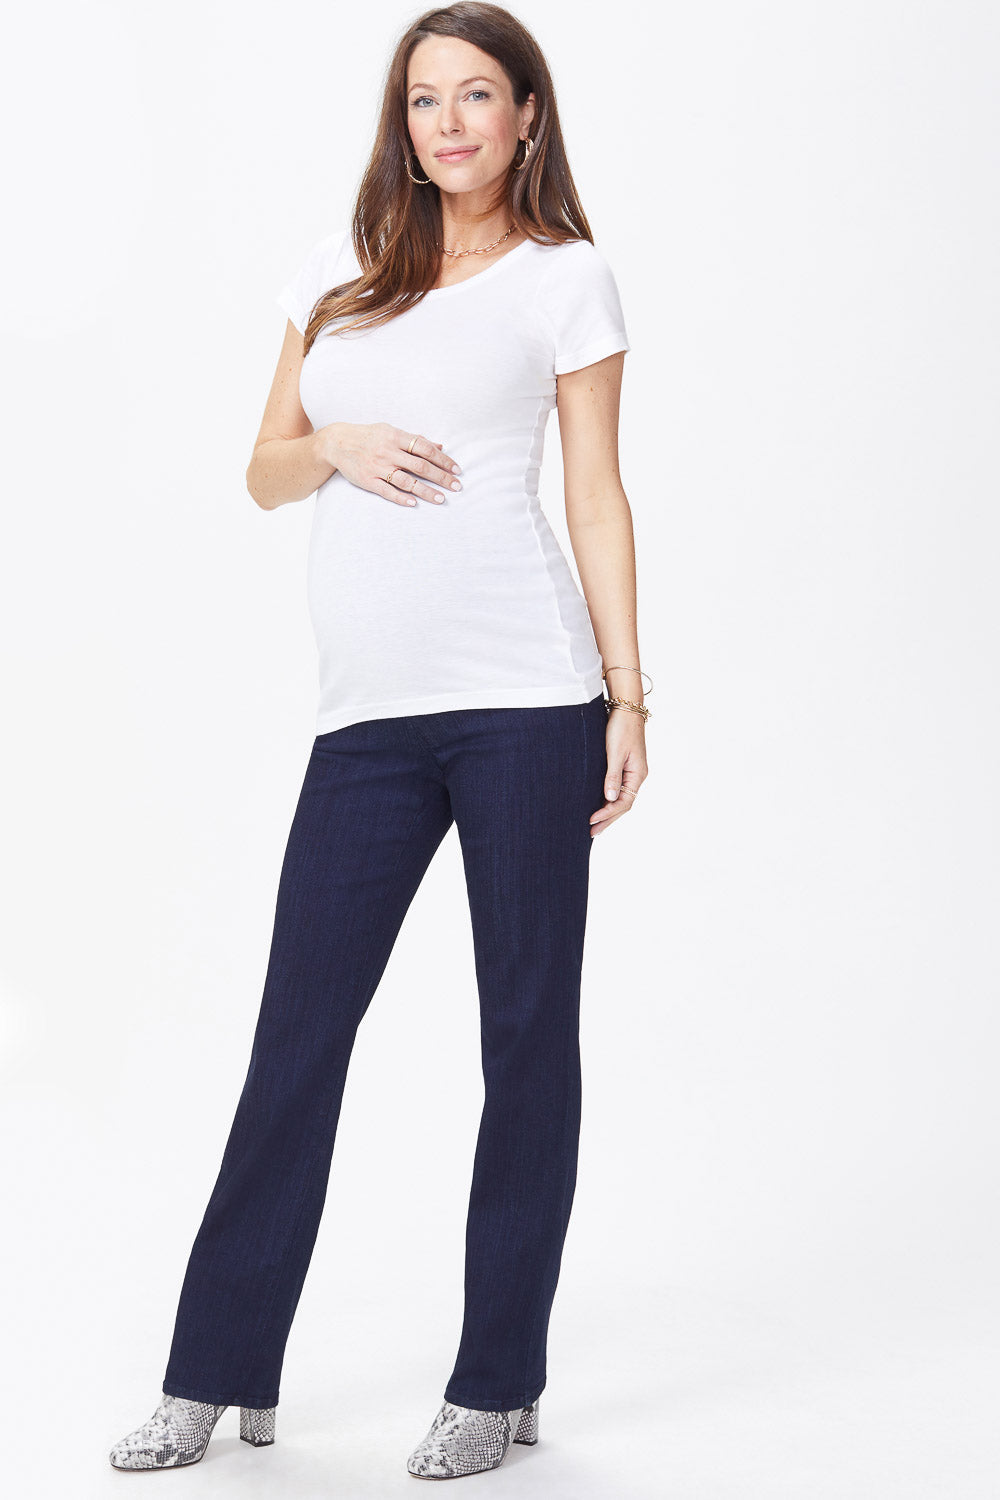 Maternity Jeans, Pregnancy Jeans